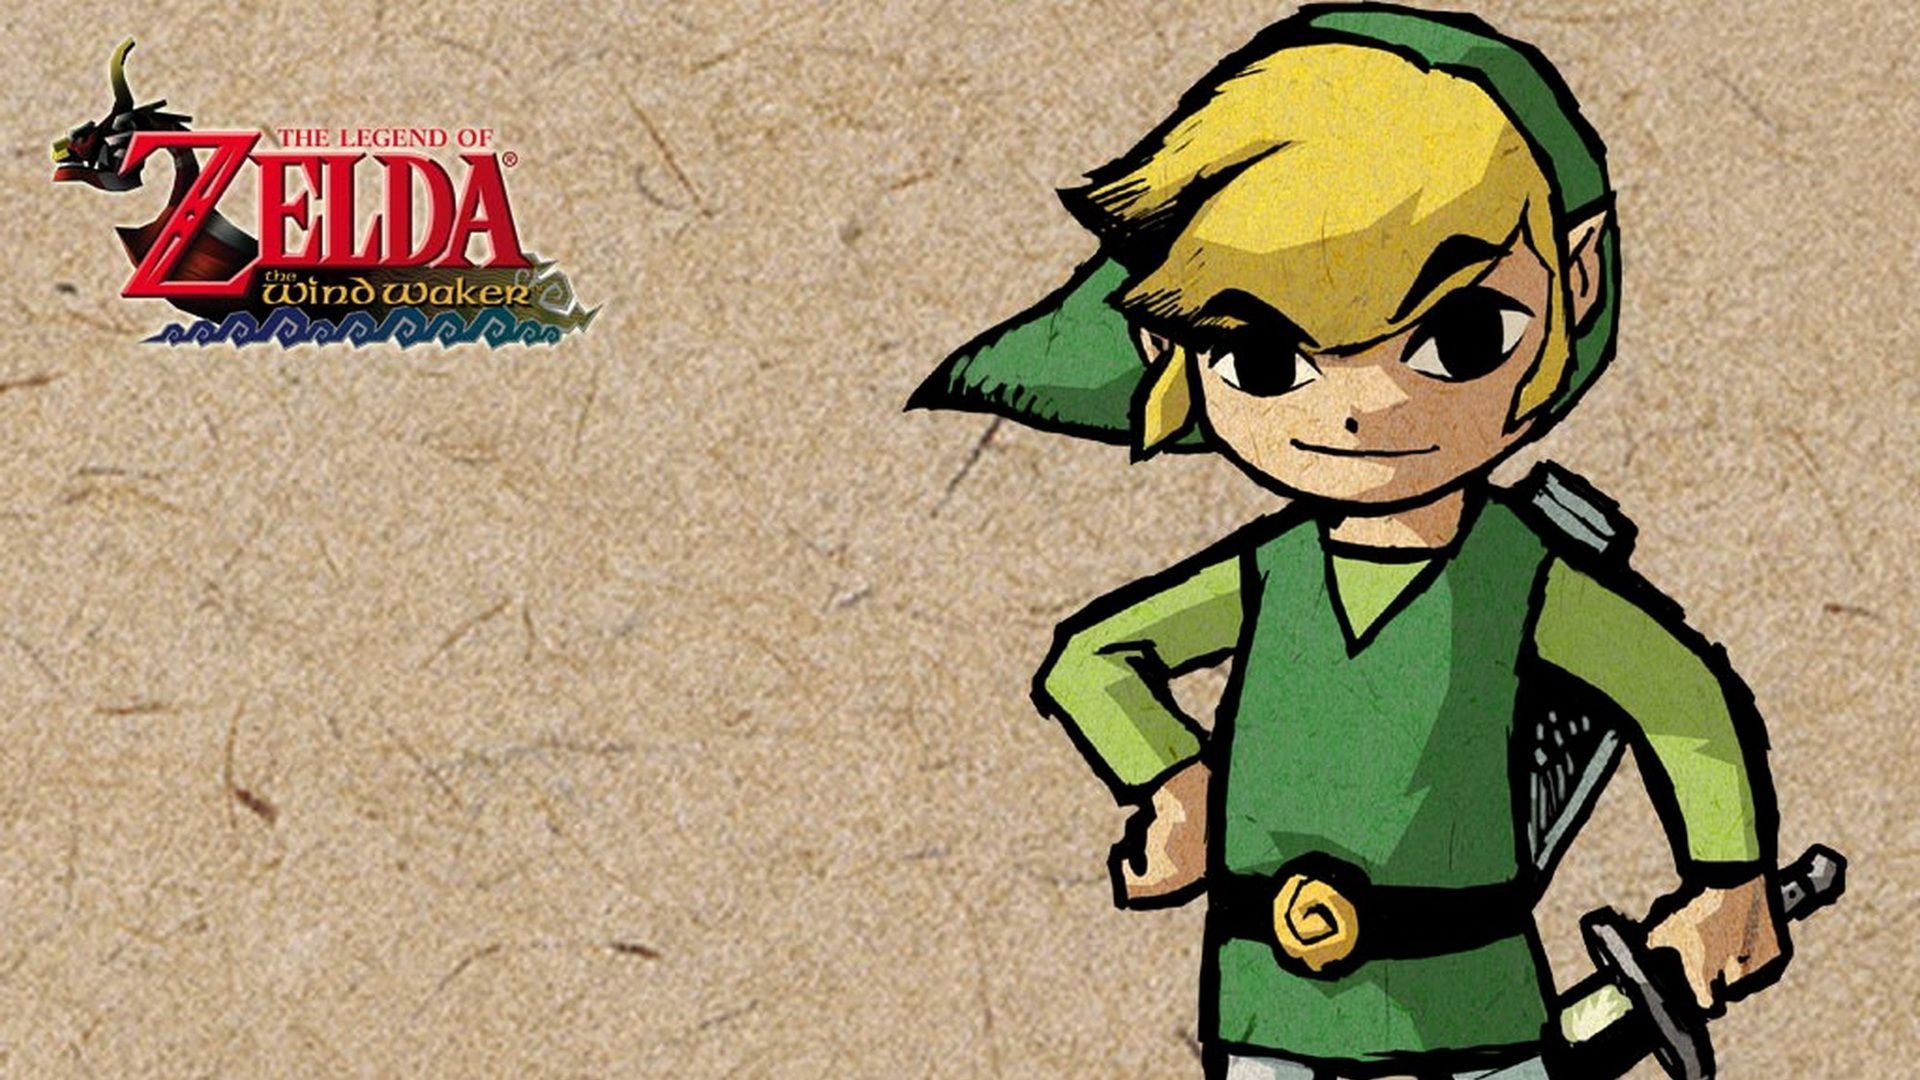 1920x1080 Video Game - The Legend of Zelda: The Wind Waker Bakgrund